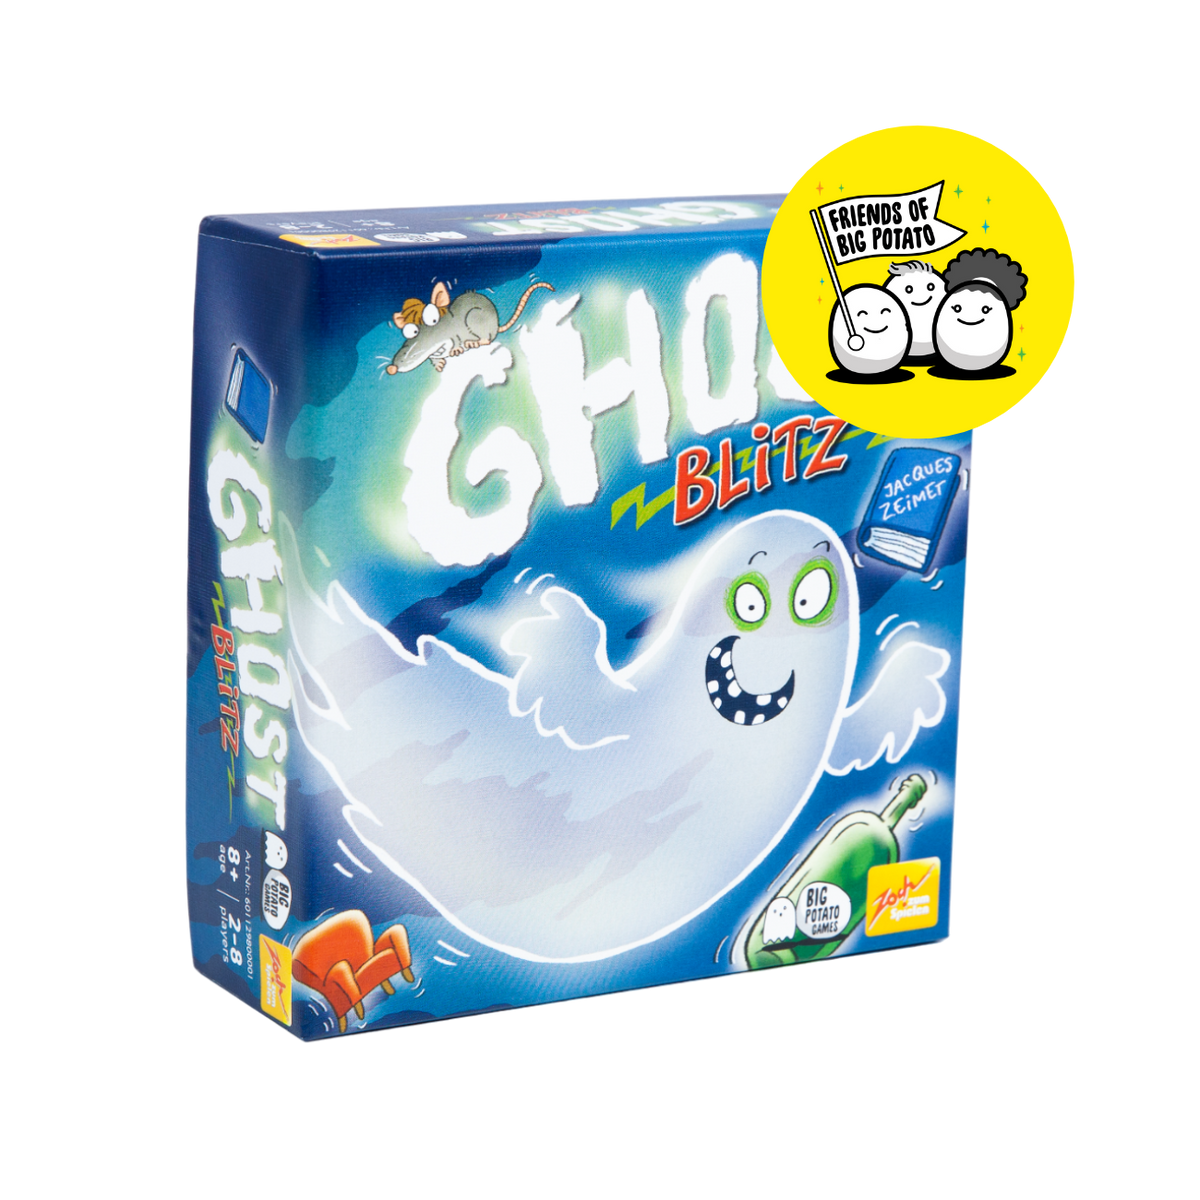 Ghost blitz game box